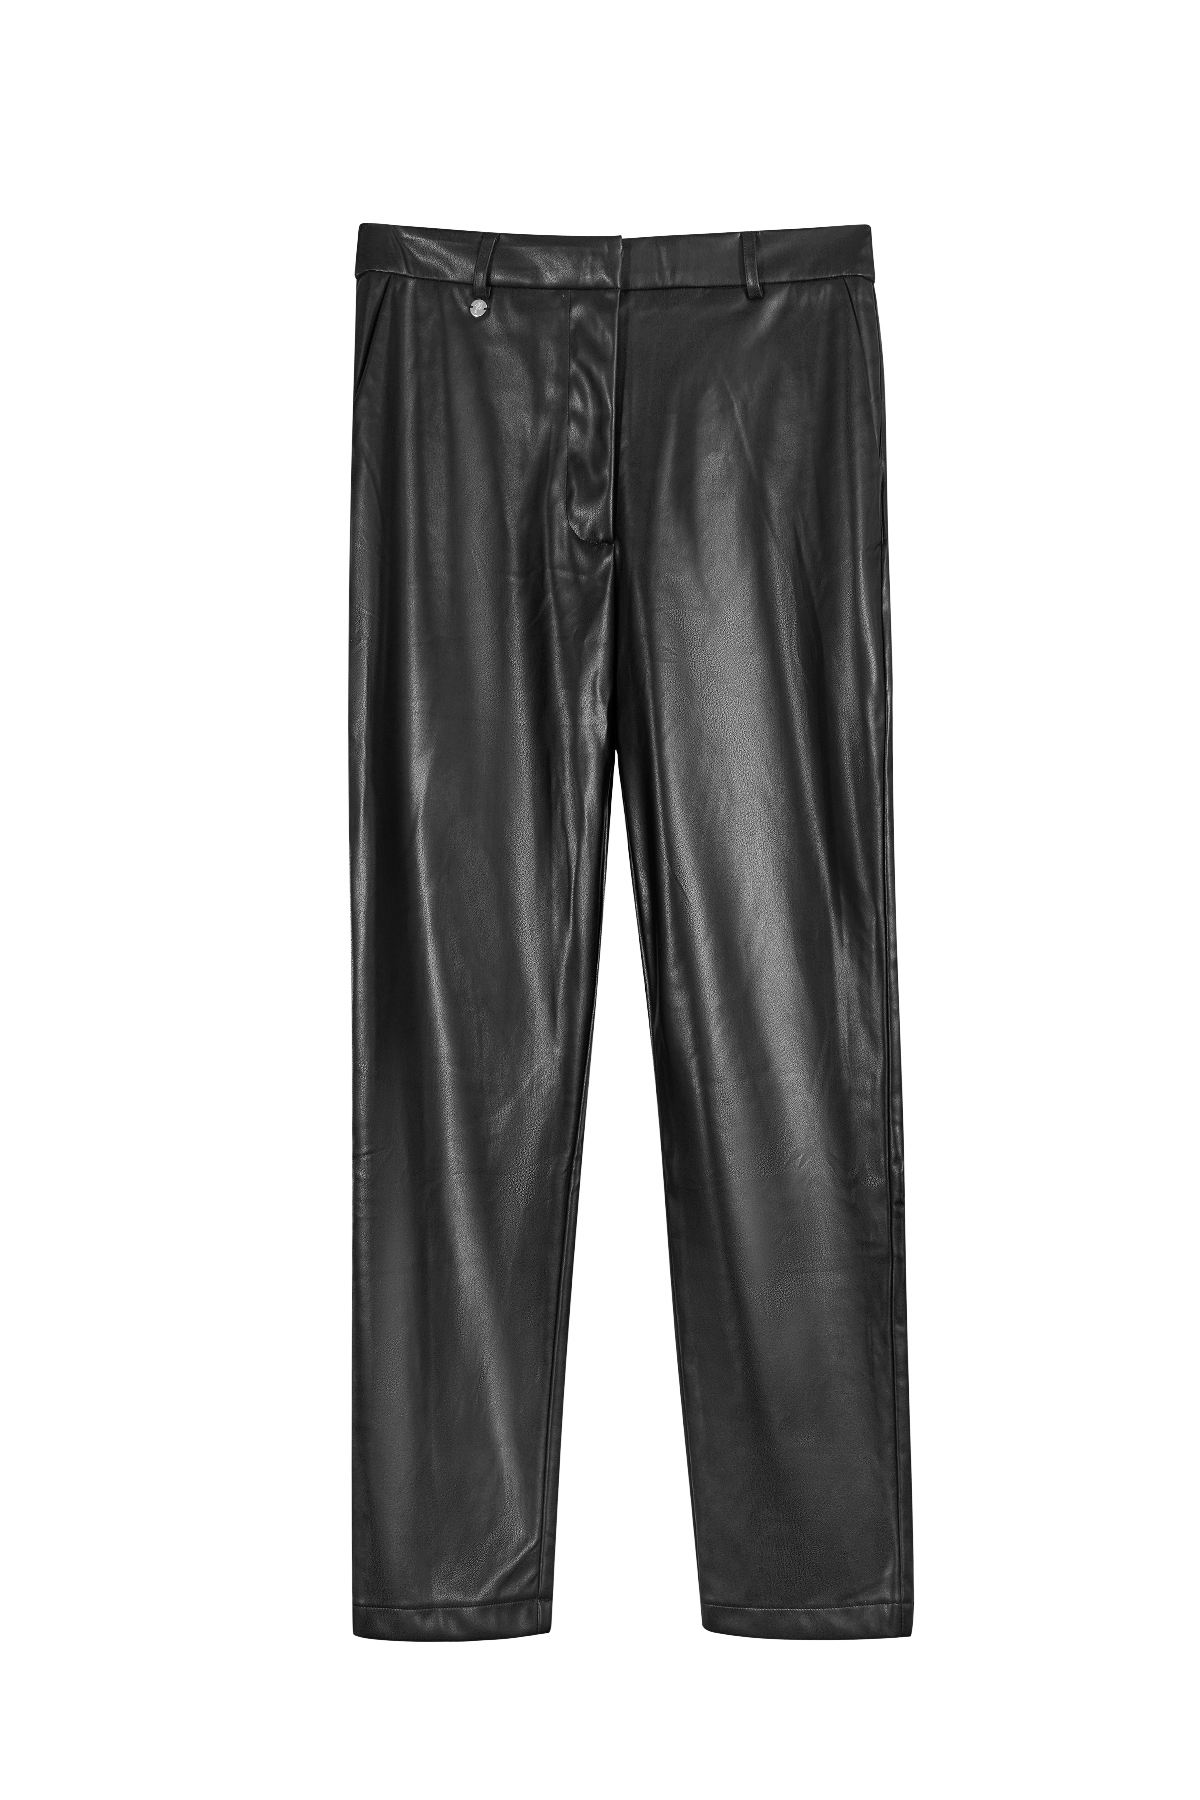 PU leather pants - black